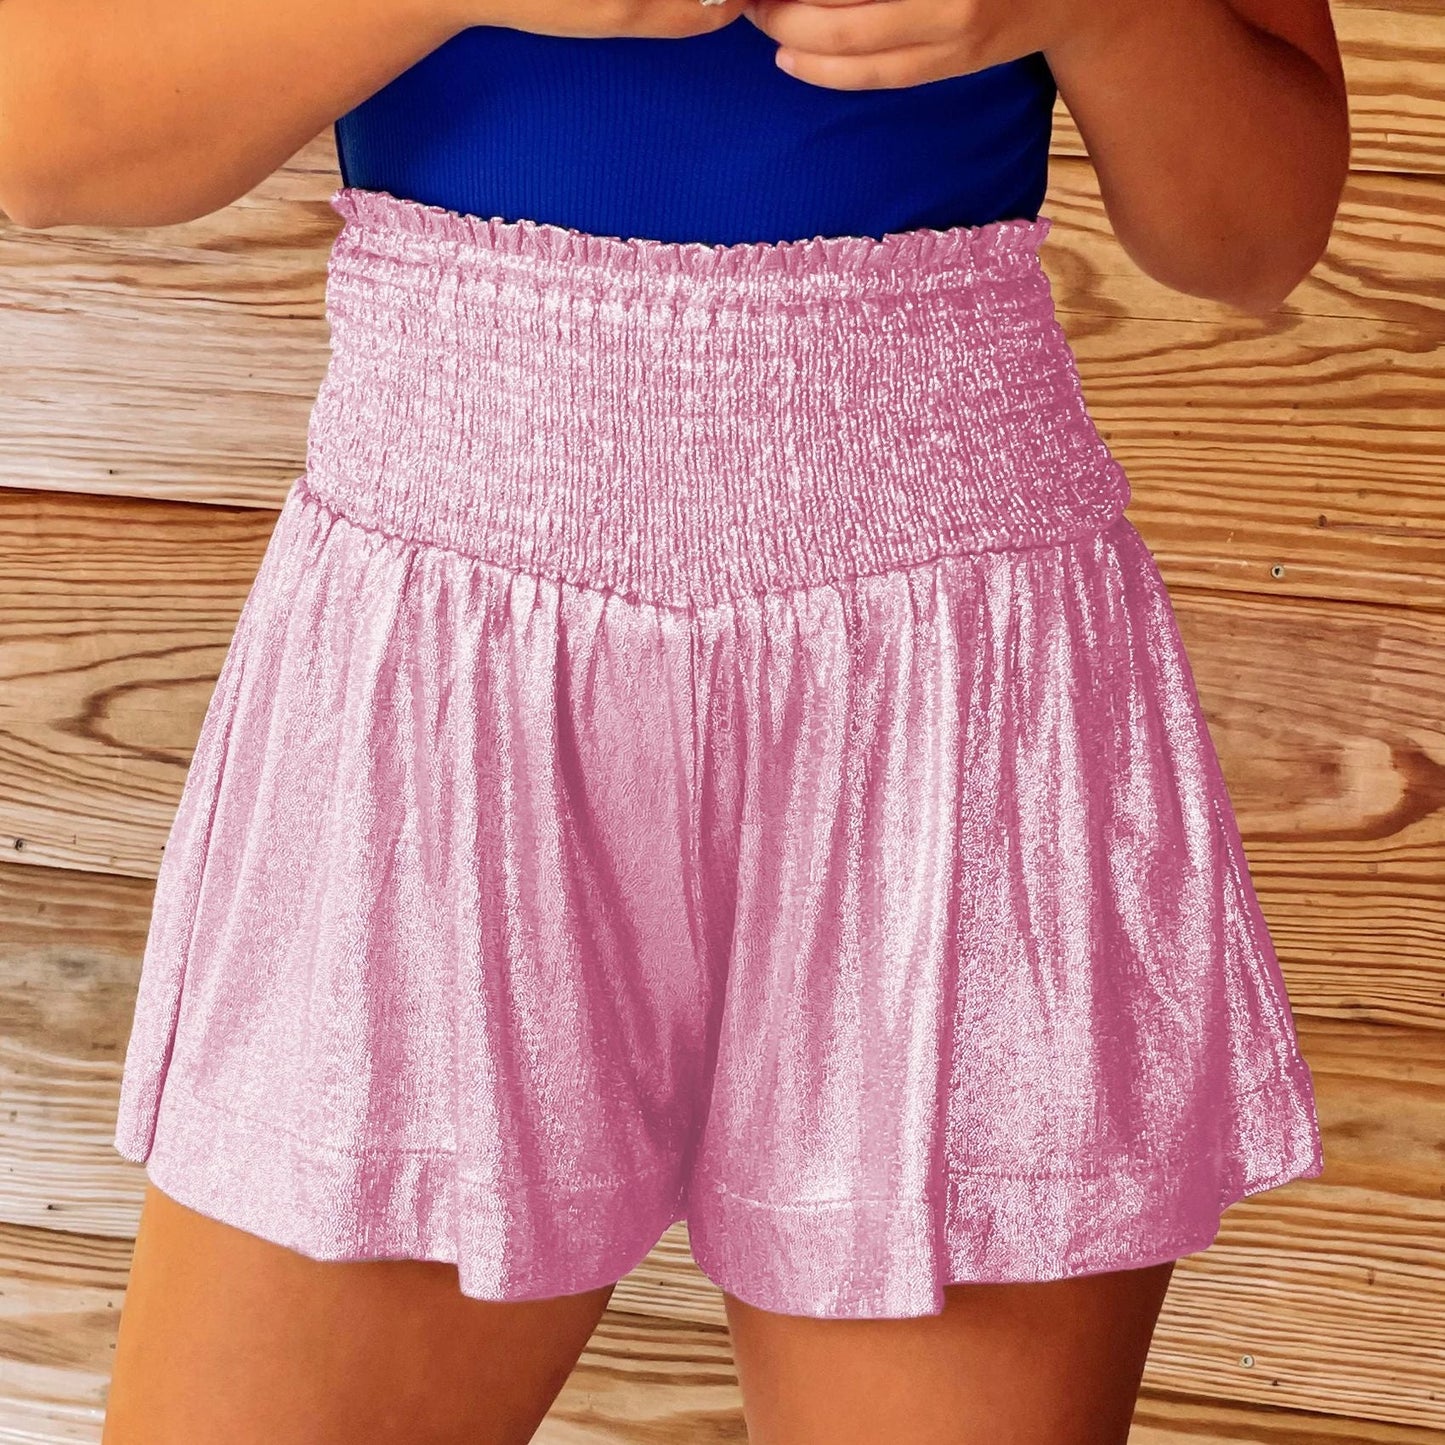 Casual Shinning Elastic Waist Summer Women Shorts-Shorts-EKDA010-黑底银-S-Free Shipping Leatheretro